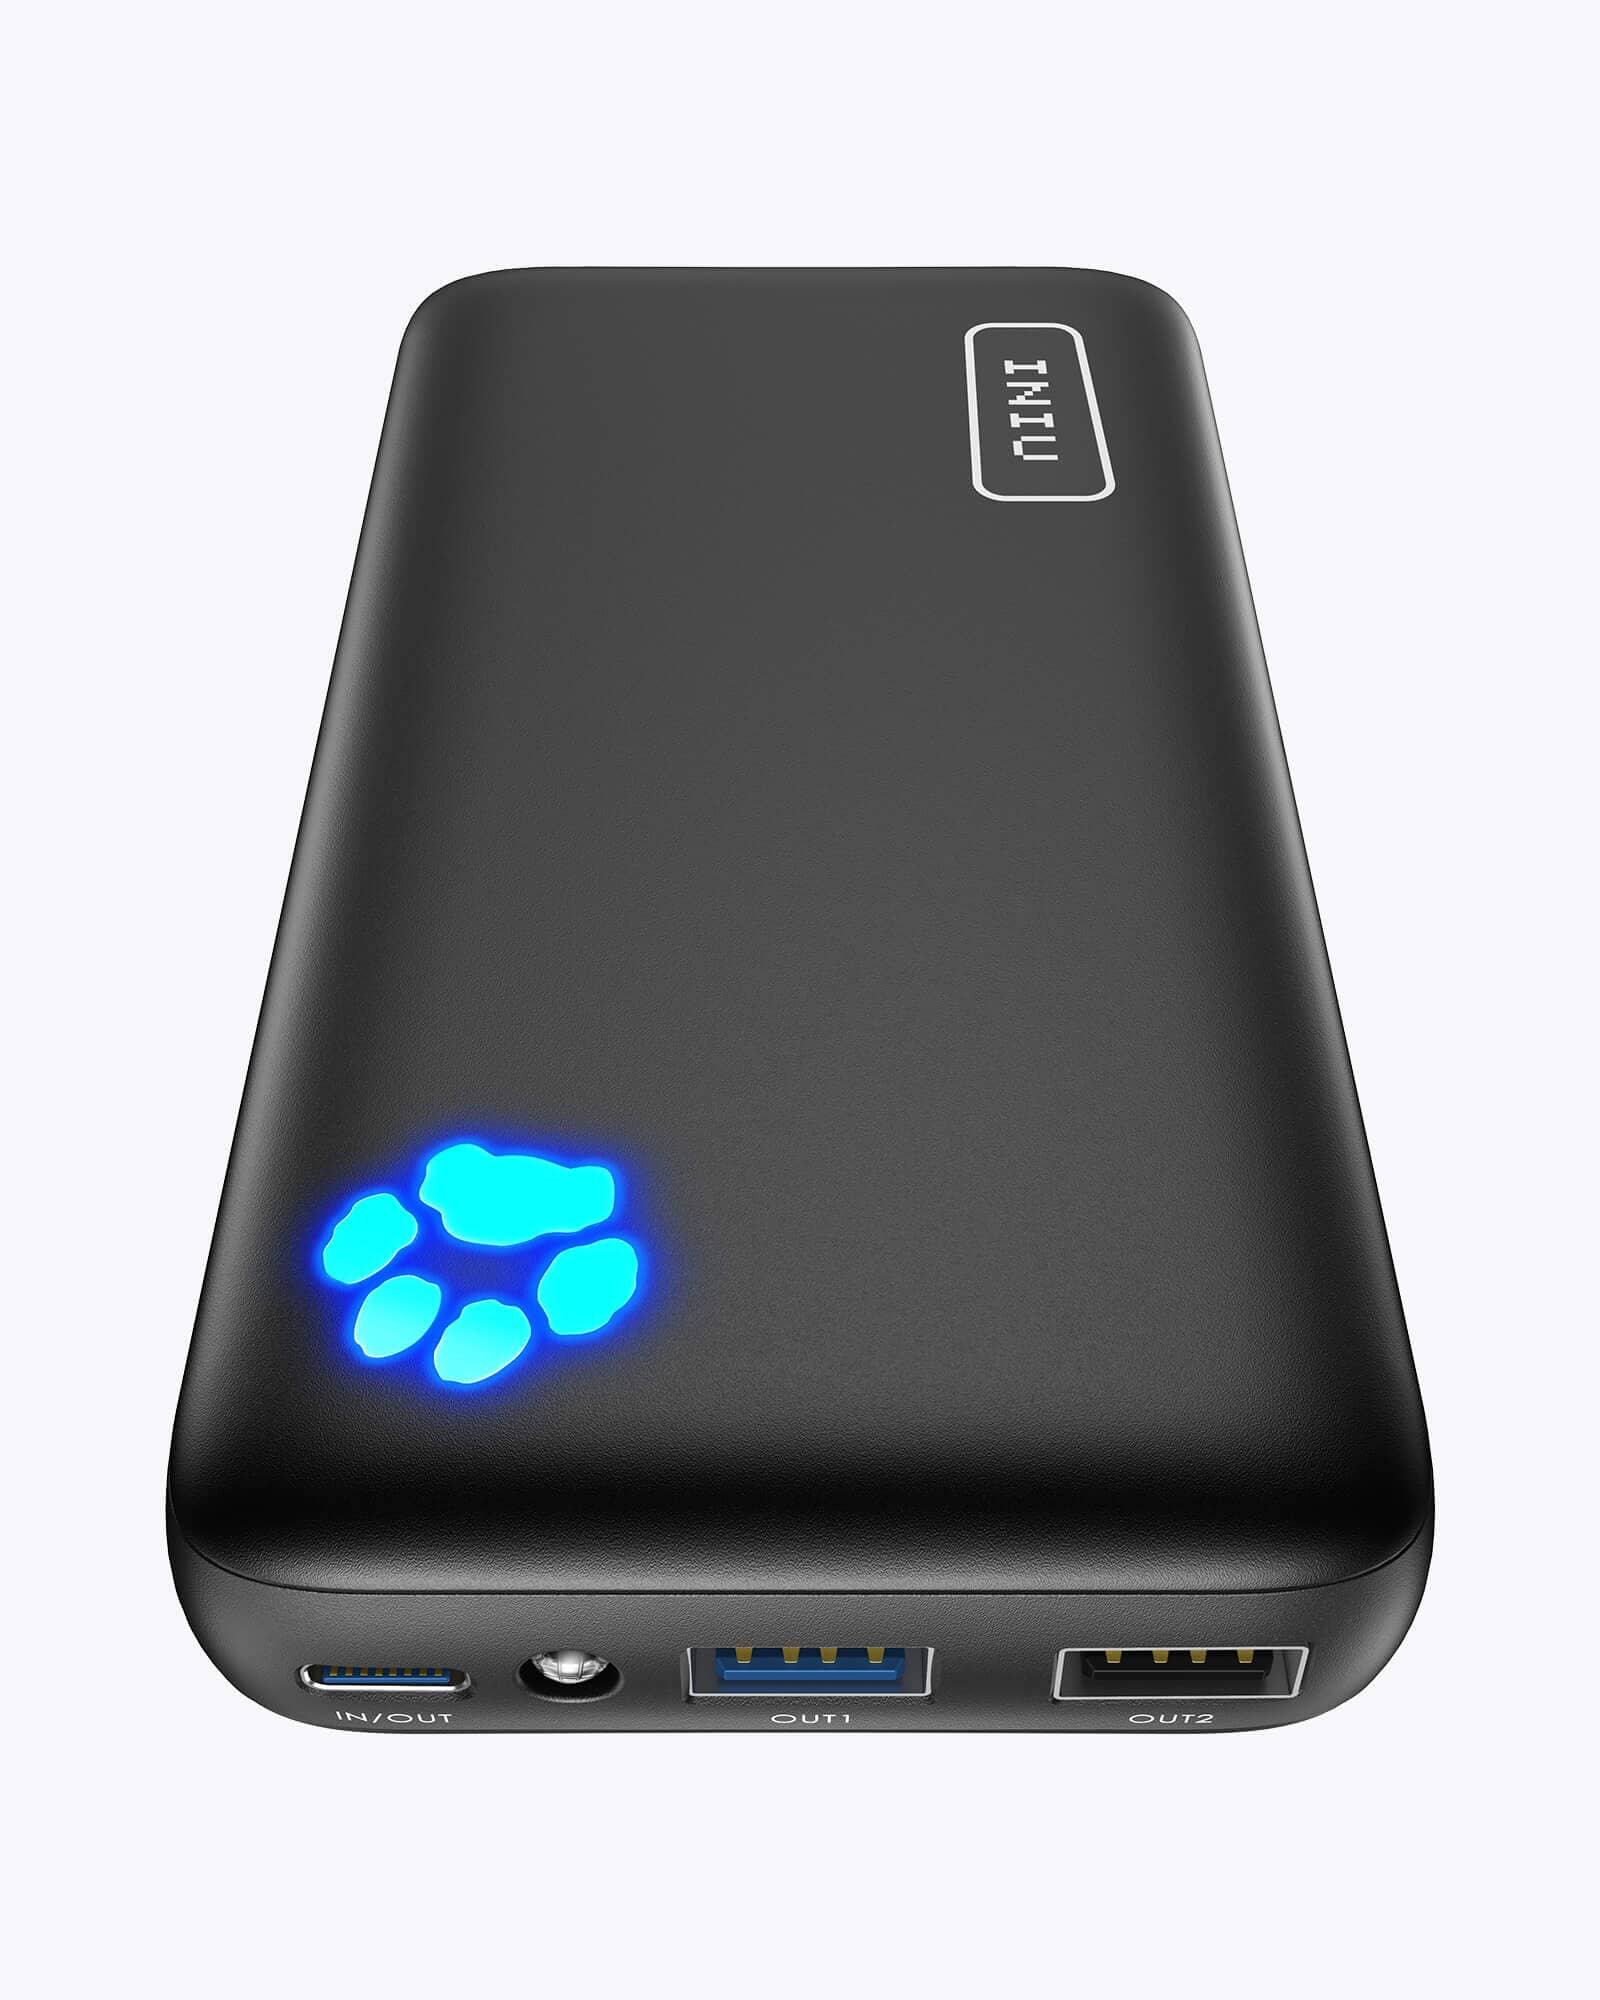 INIU Mini Power Bank, 10000mAh 22.5W Portable Fast Charge USB C